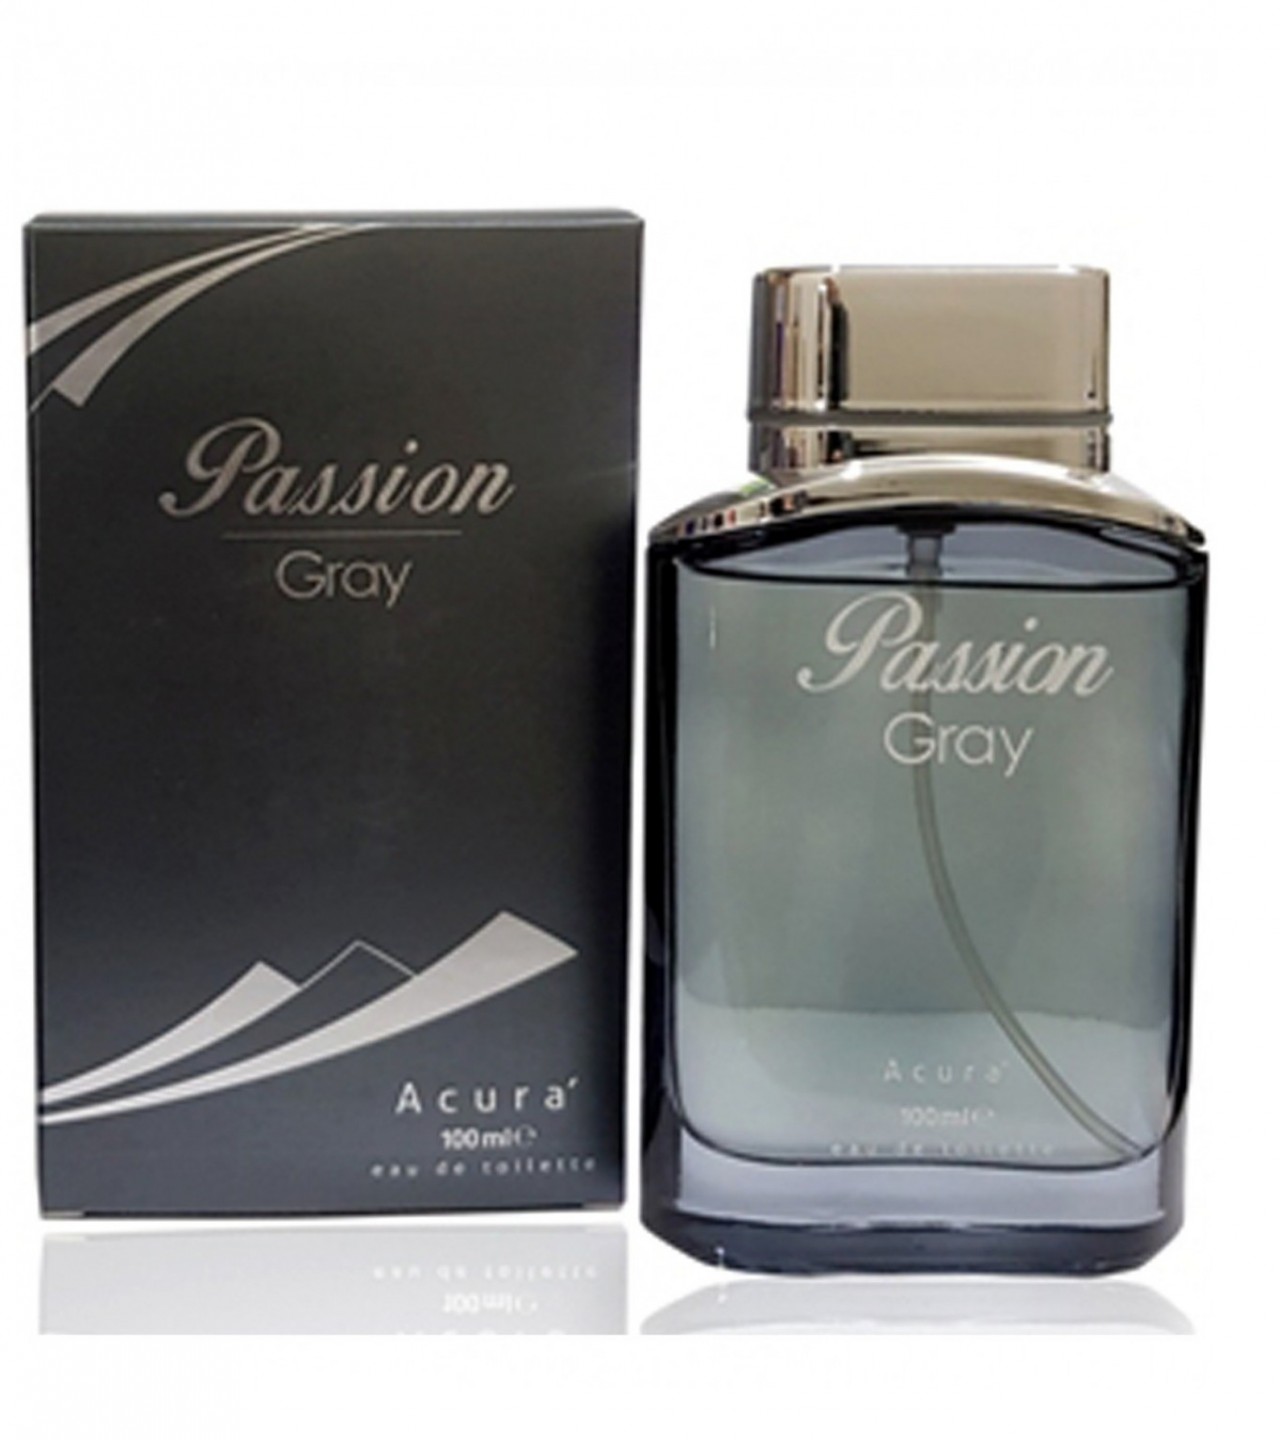 Acura Passion Perfume For Men - Eau De Toilette - 100 ml - Gray